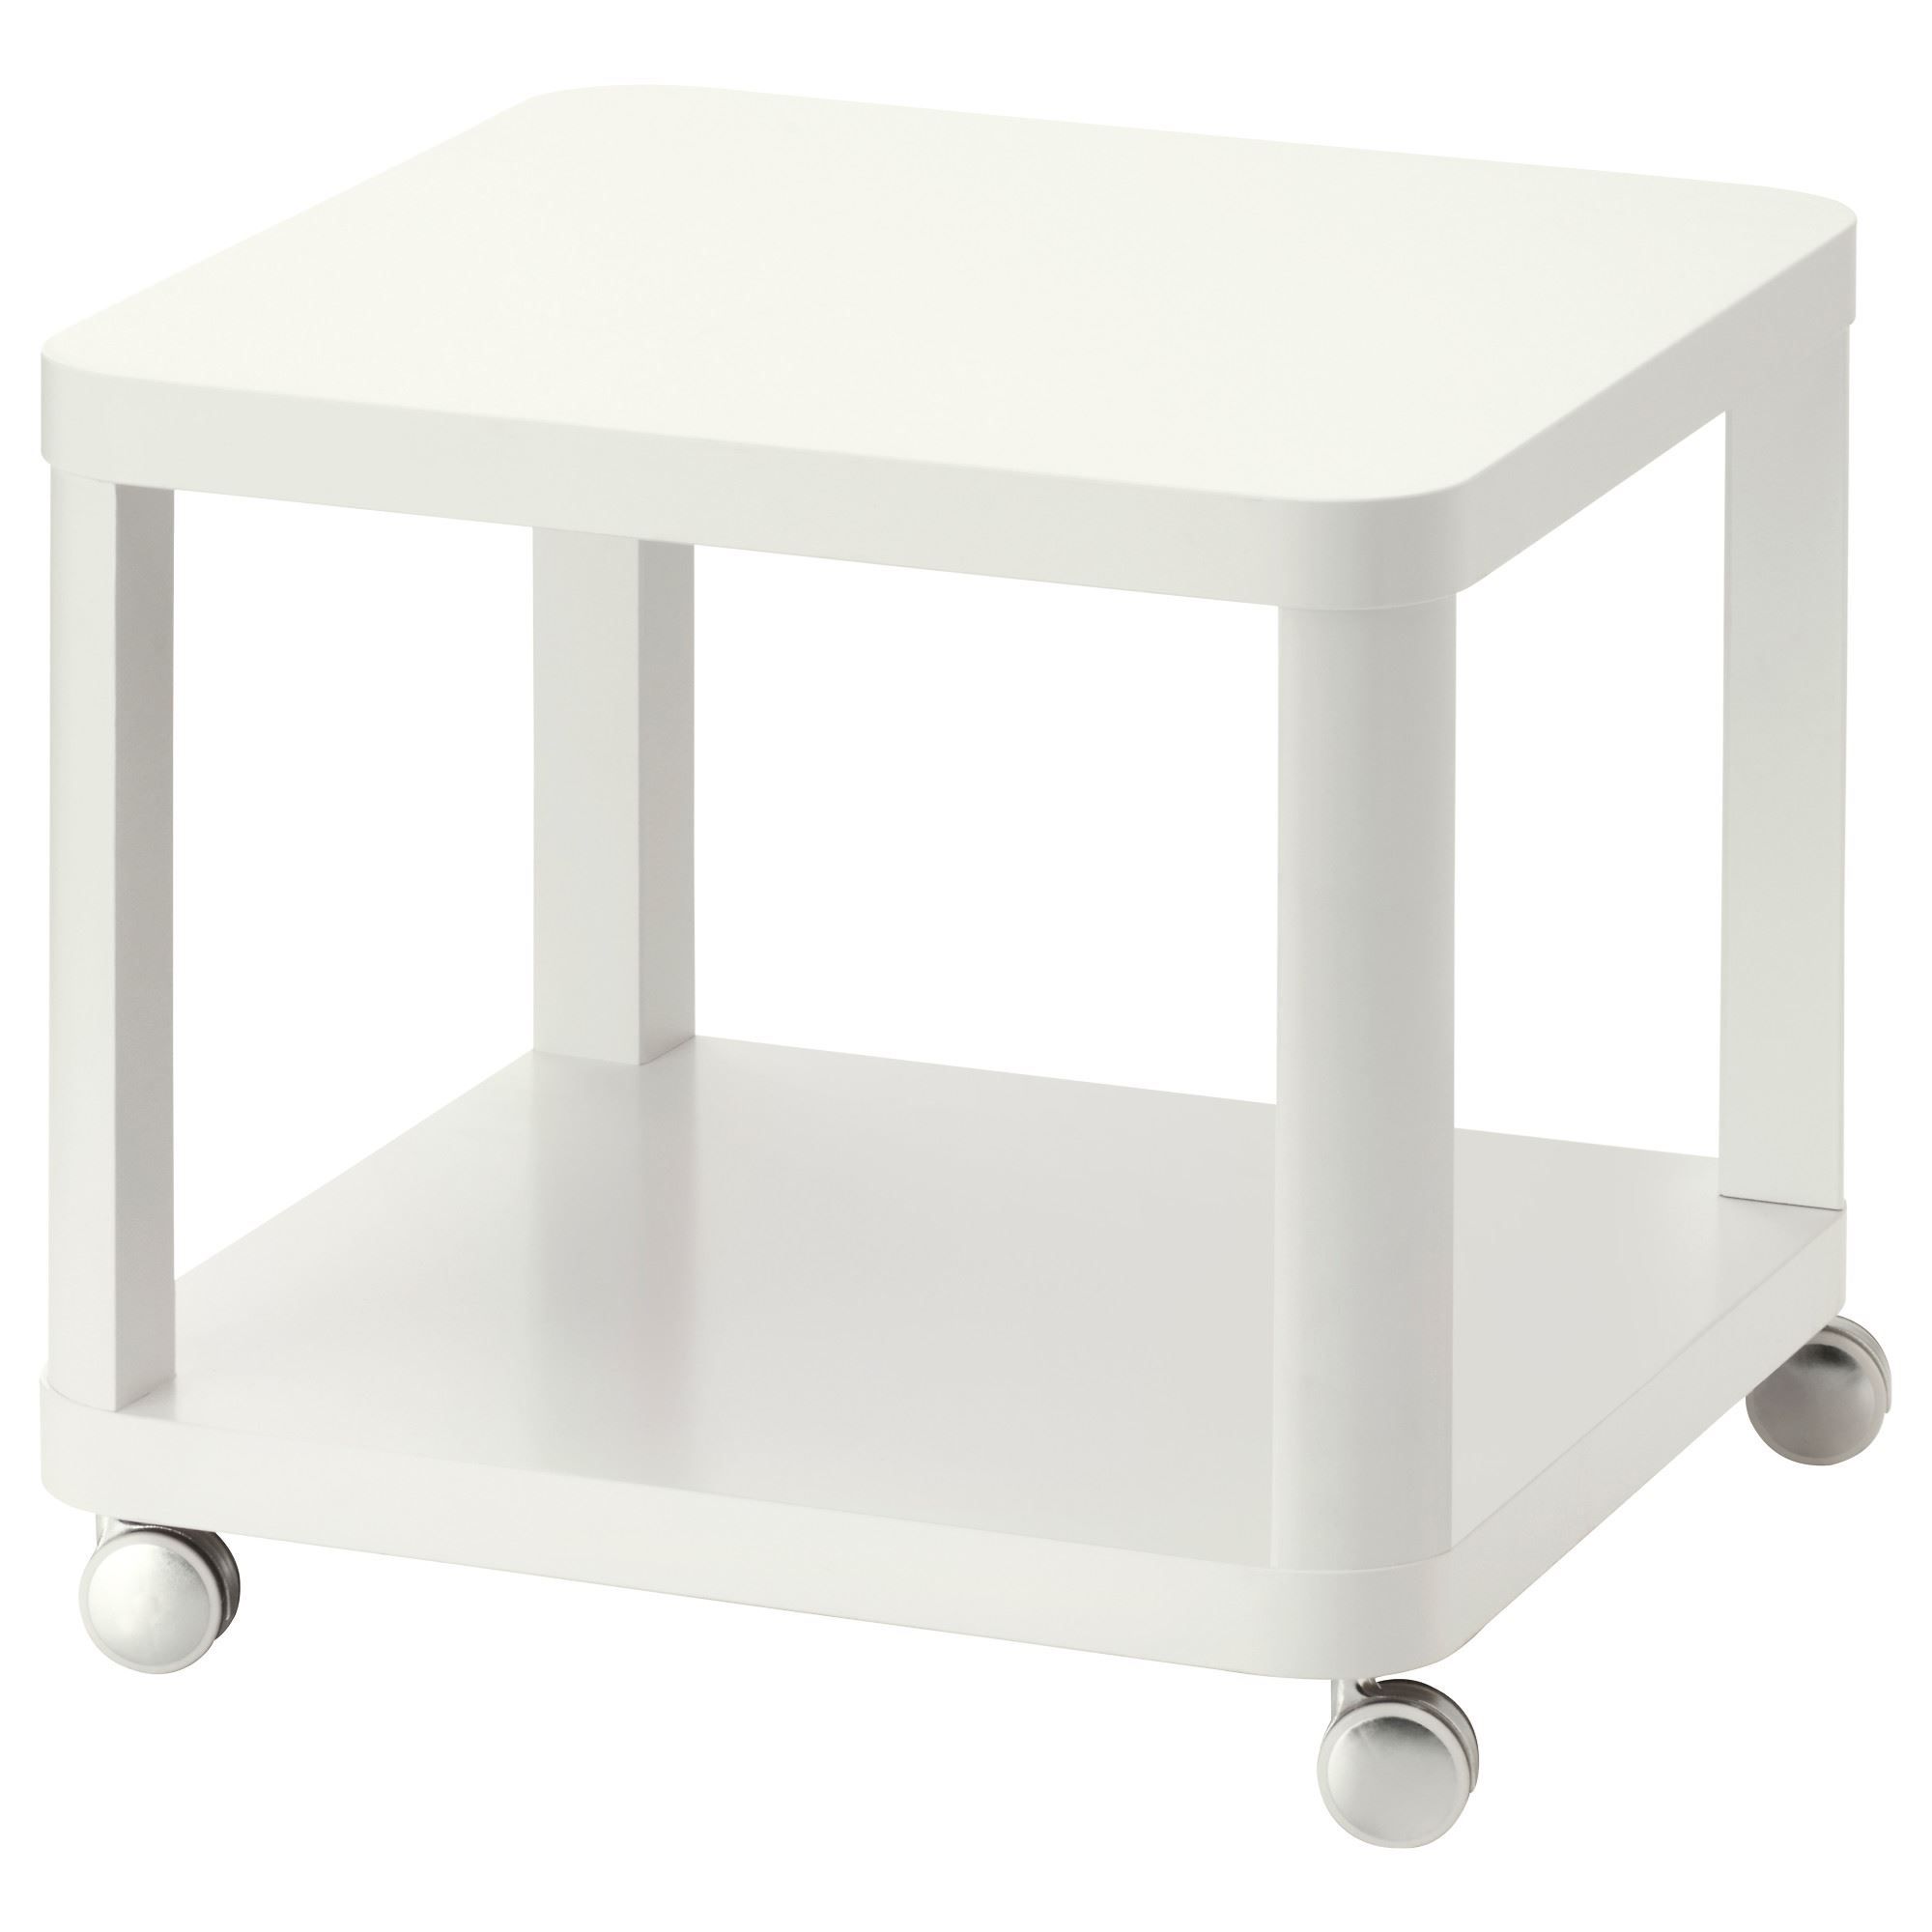 TINGBY ТИНГБИ стол приставной на колесиках, серый50x50 см